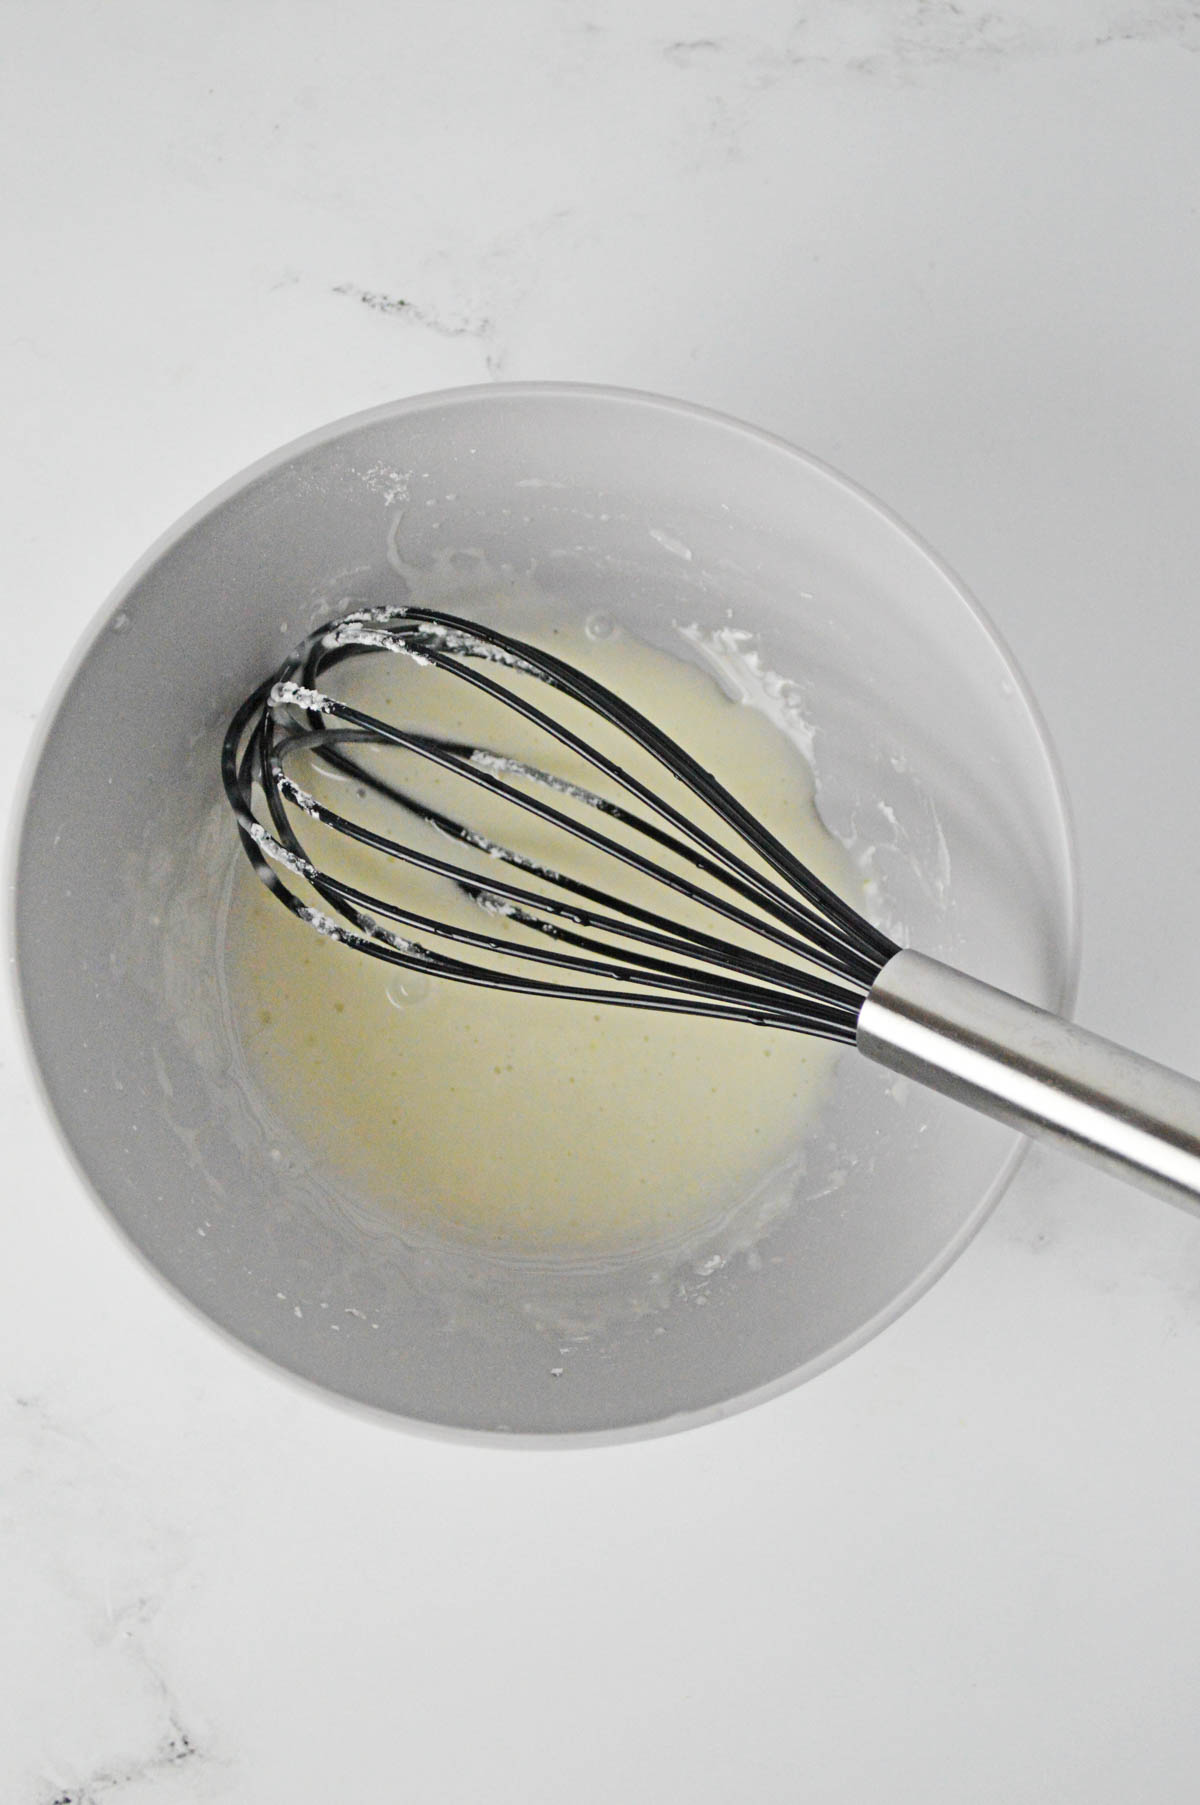 Powdered sugar and lemon juice in mixing bowl